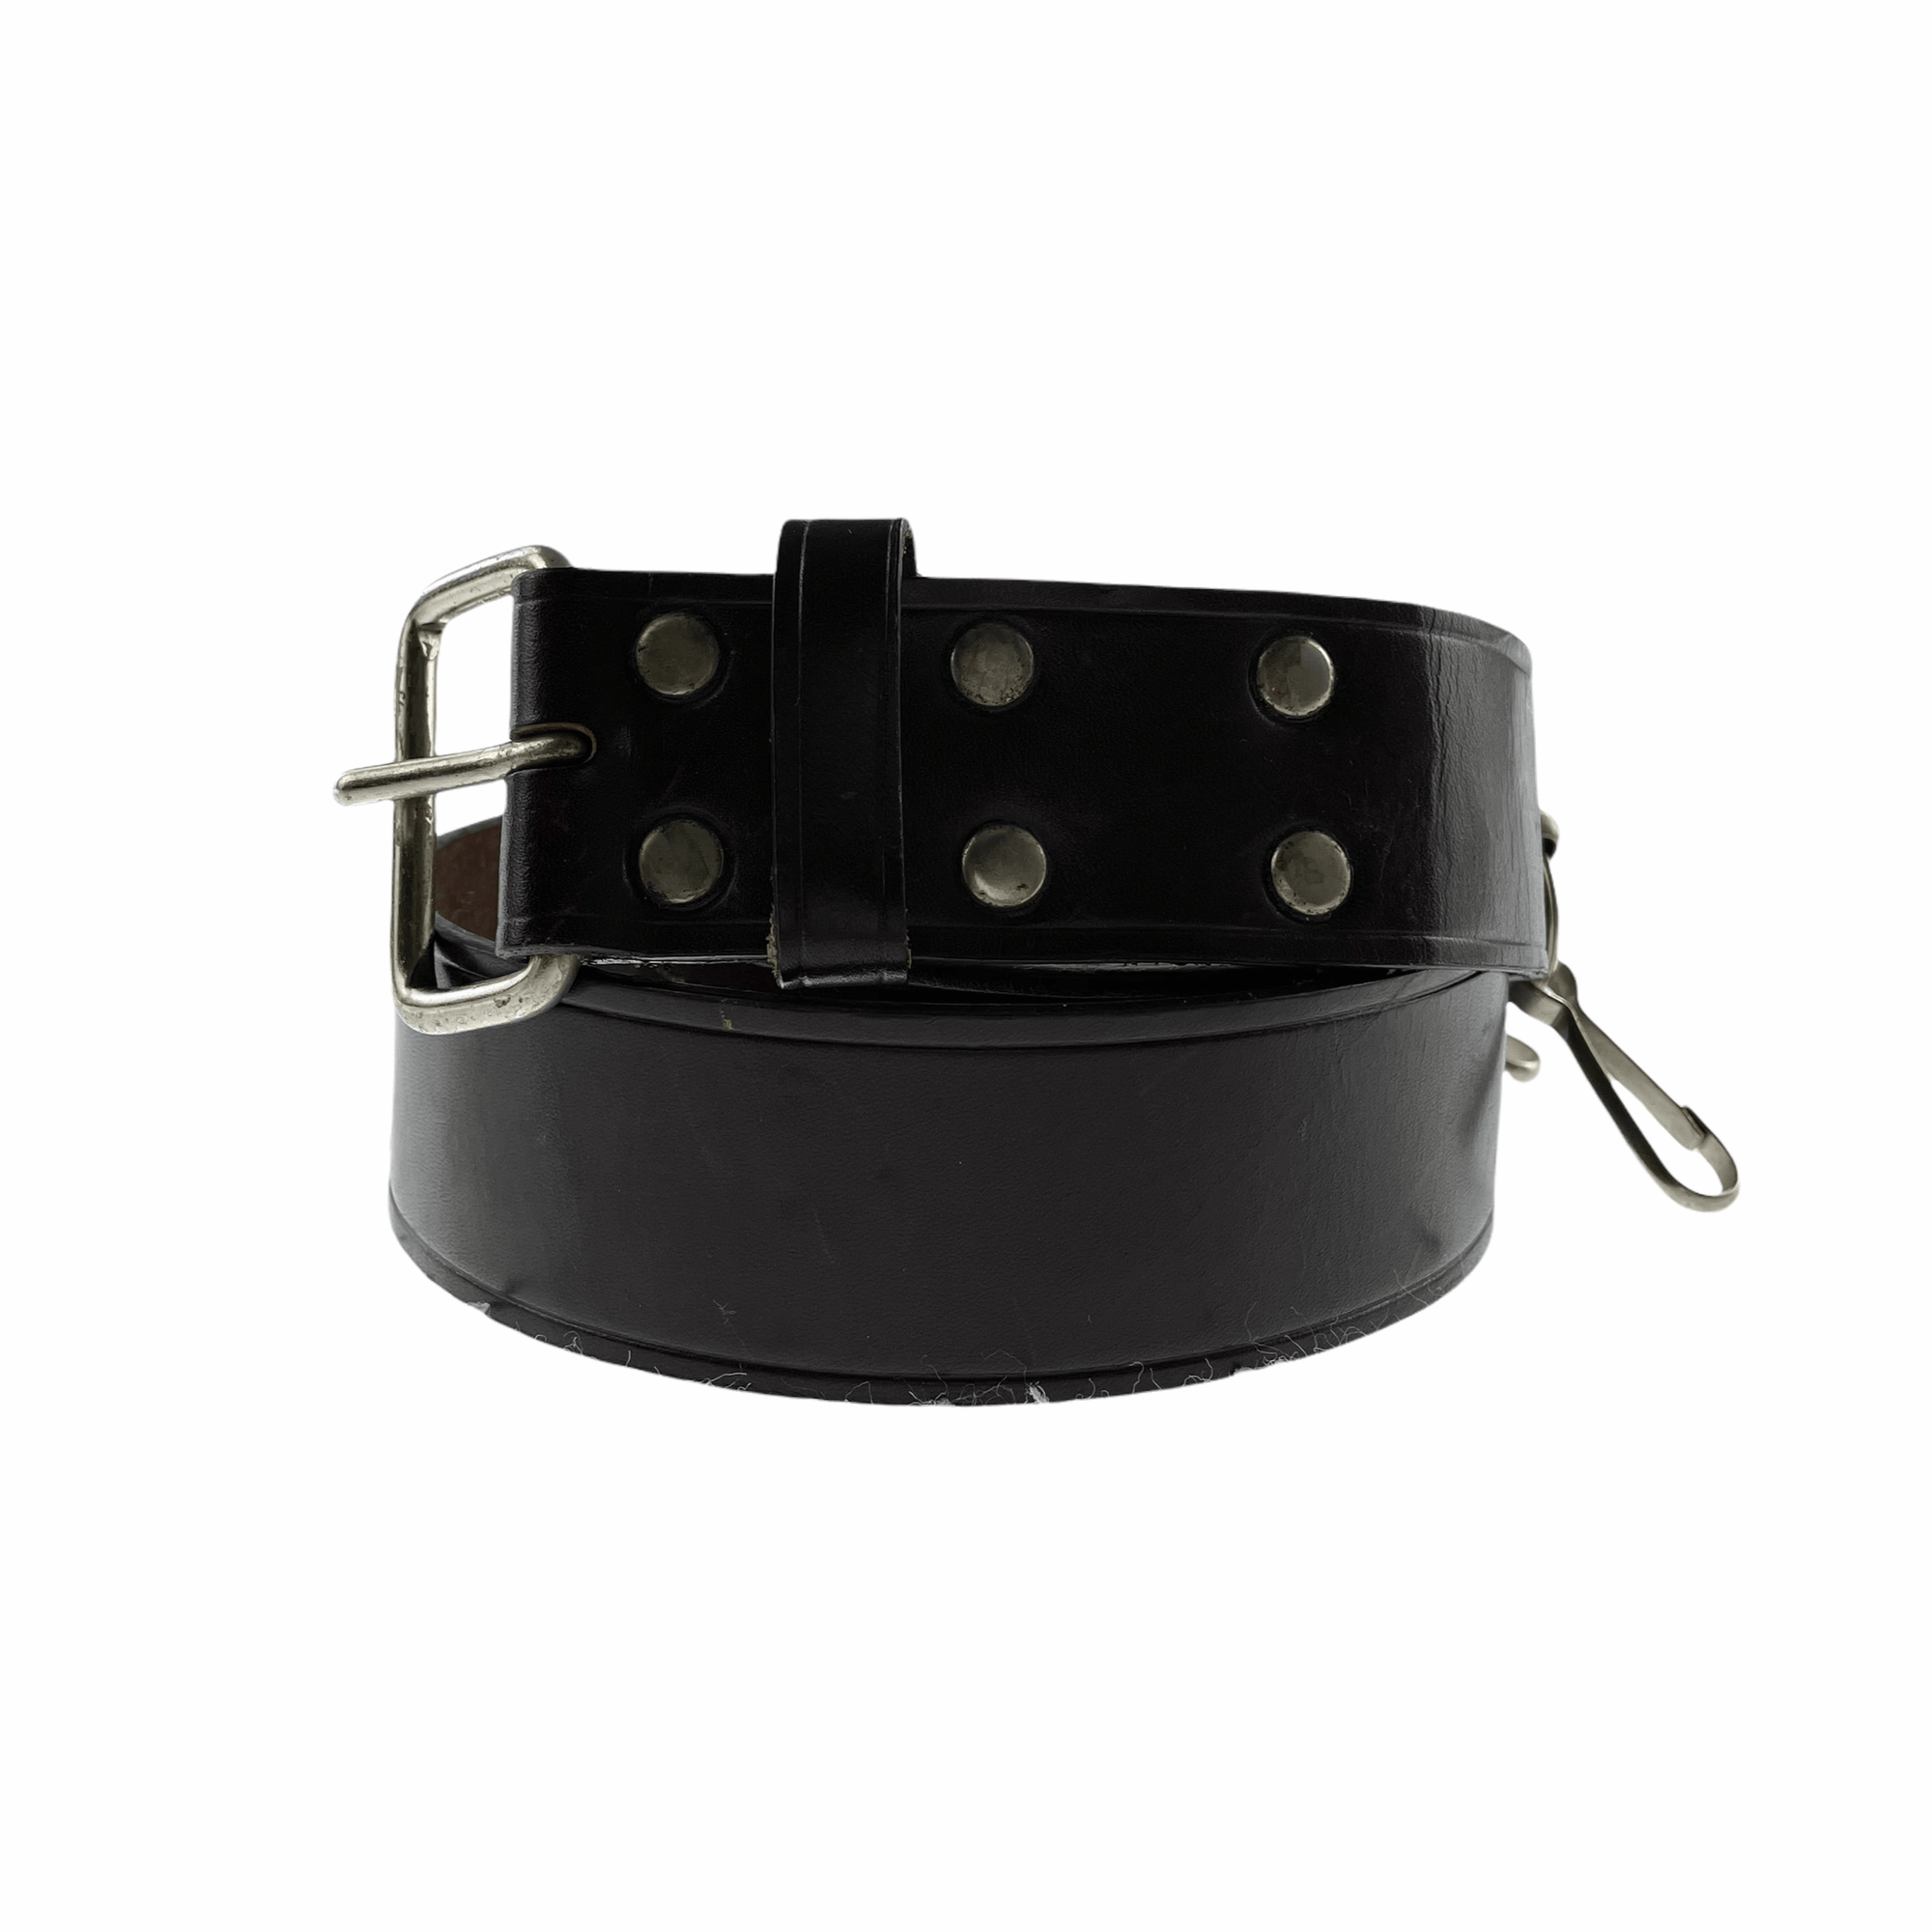 Vintage Comme des garçons leather buckle belt - second wave vintage store